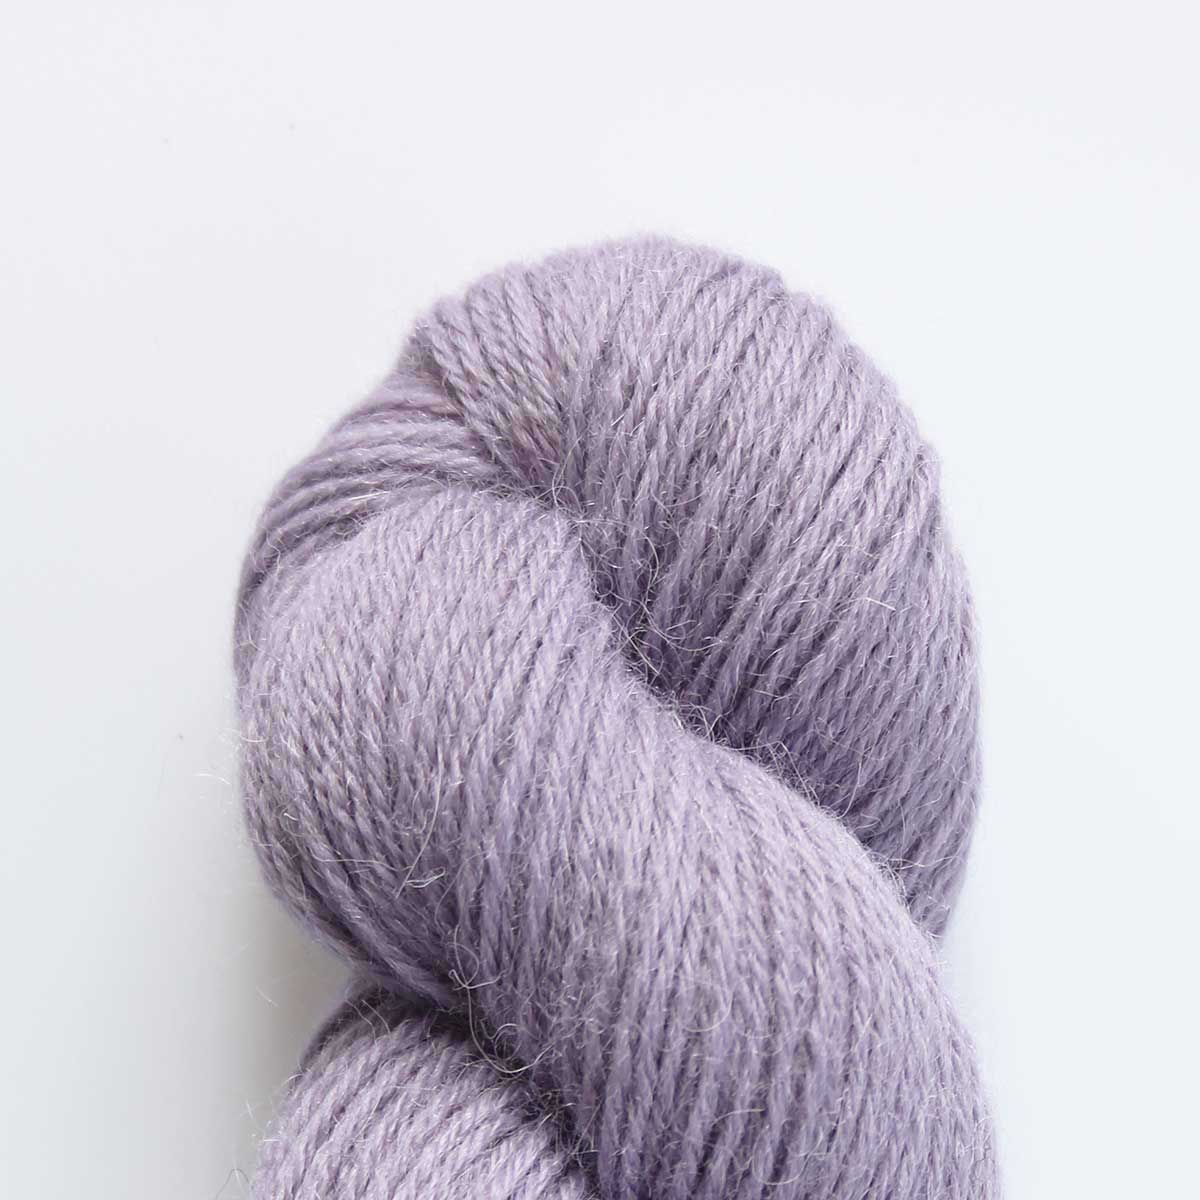 Eden DK: 70% Organic British Hand Knitting Wool, 30% Alpaca 100g Hank